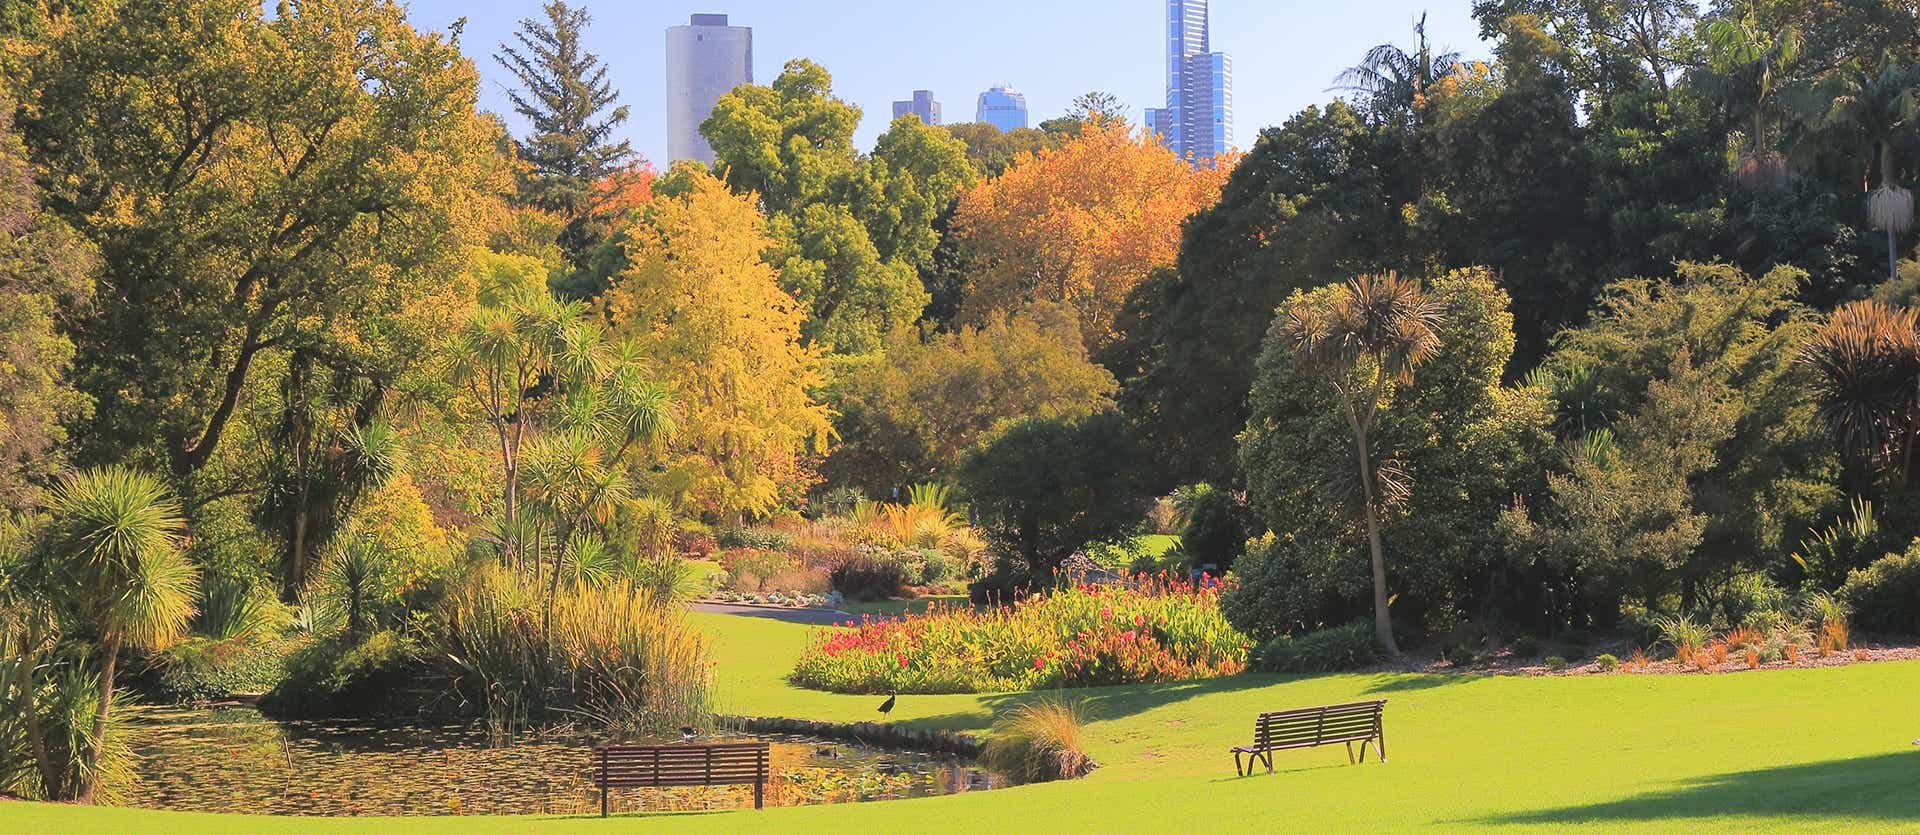 Botanical Gardens <span class="iconos separador"></span> Melbourne